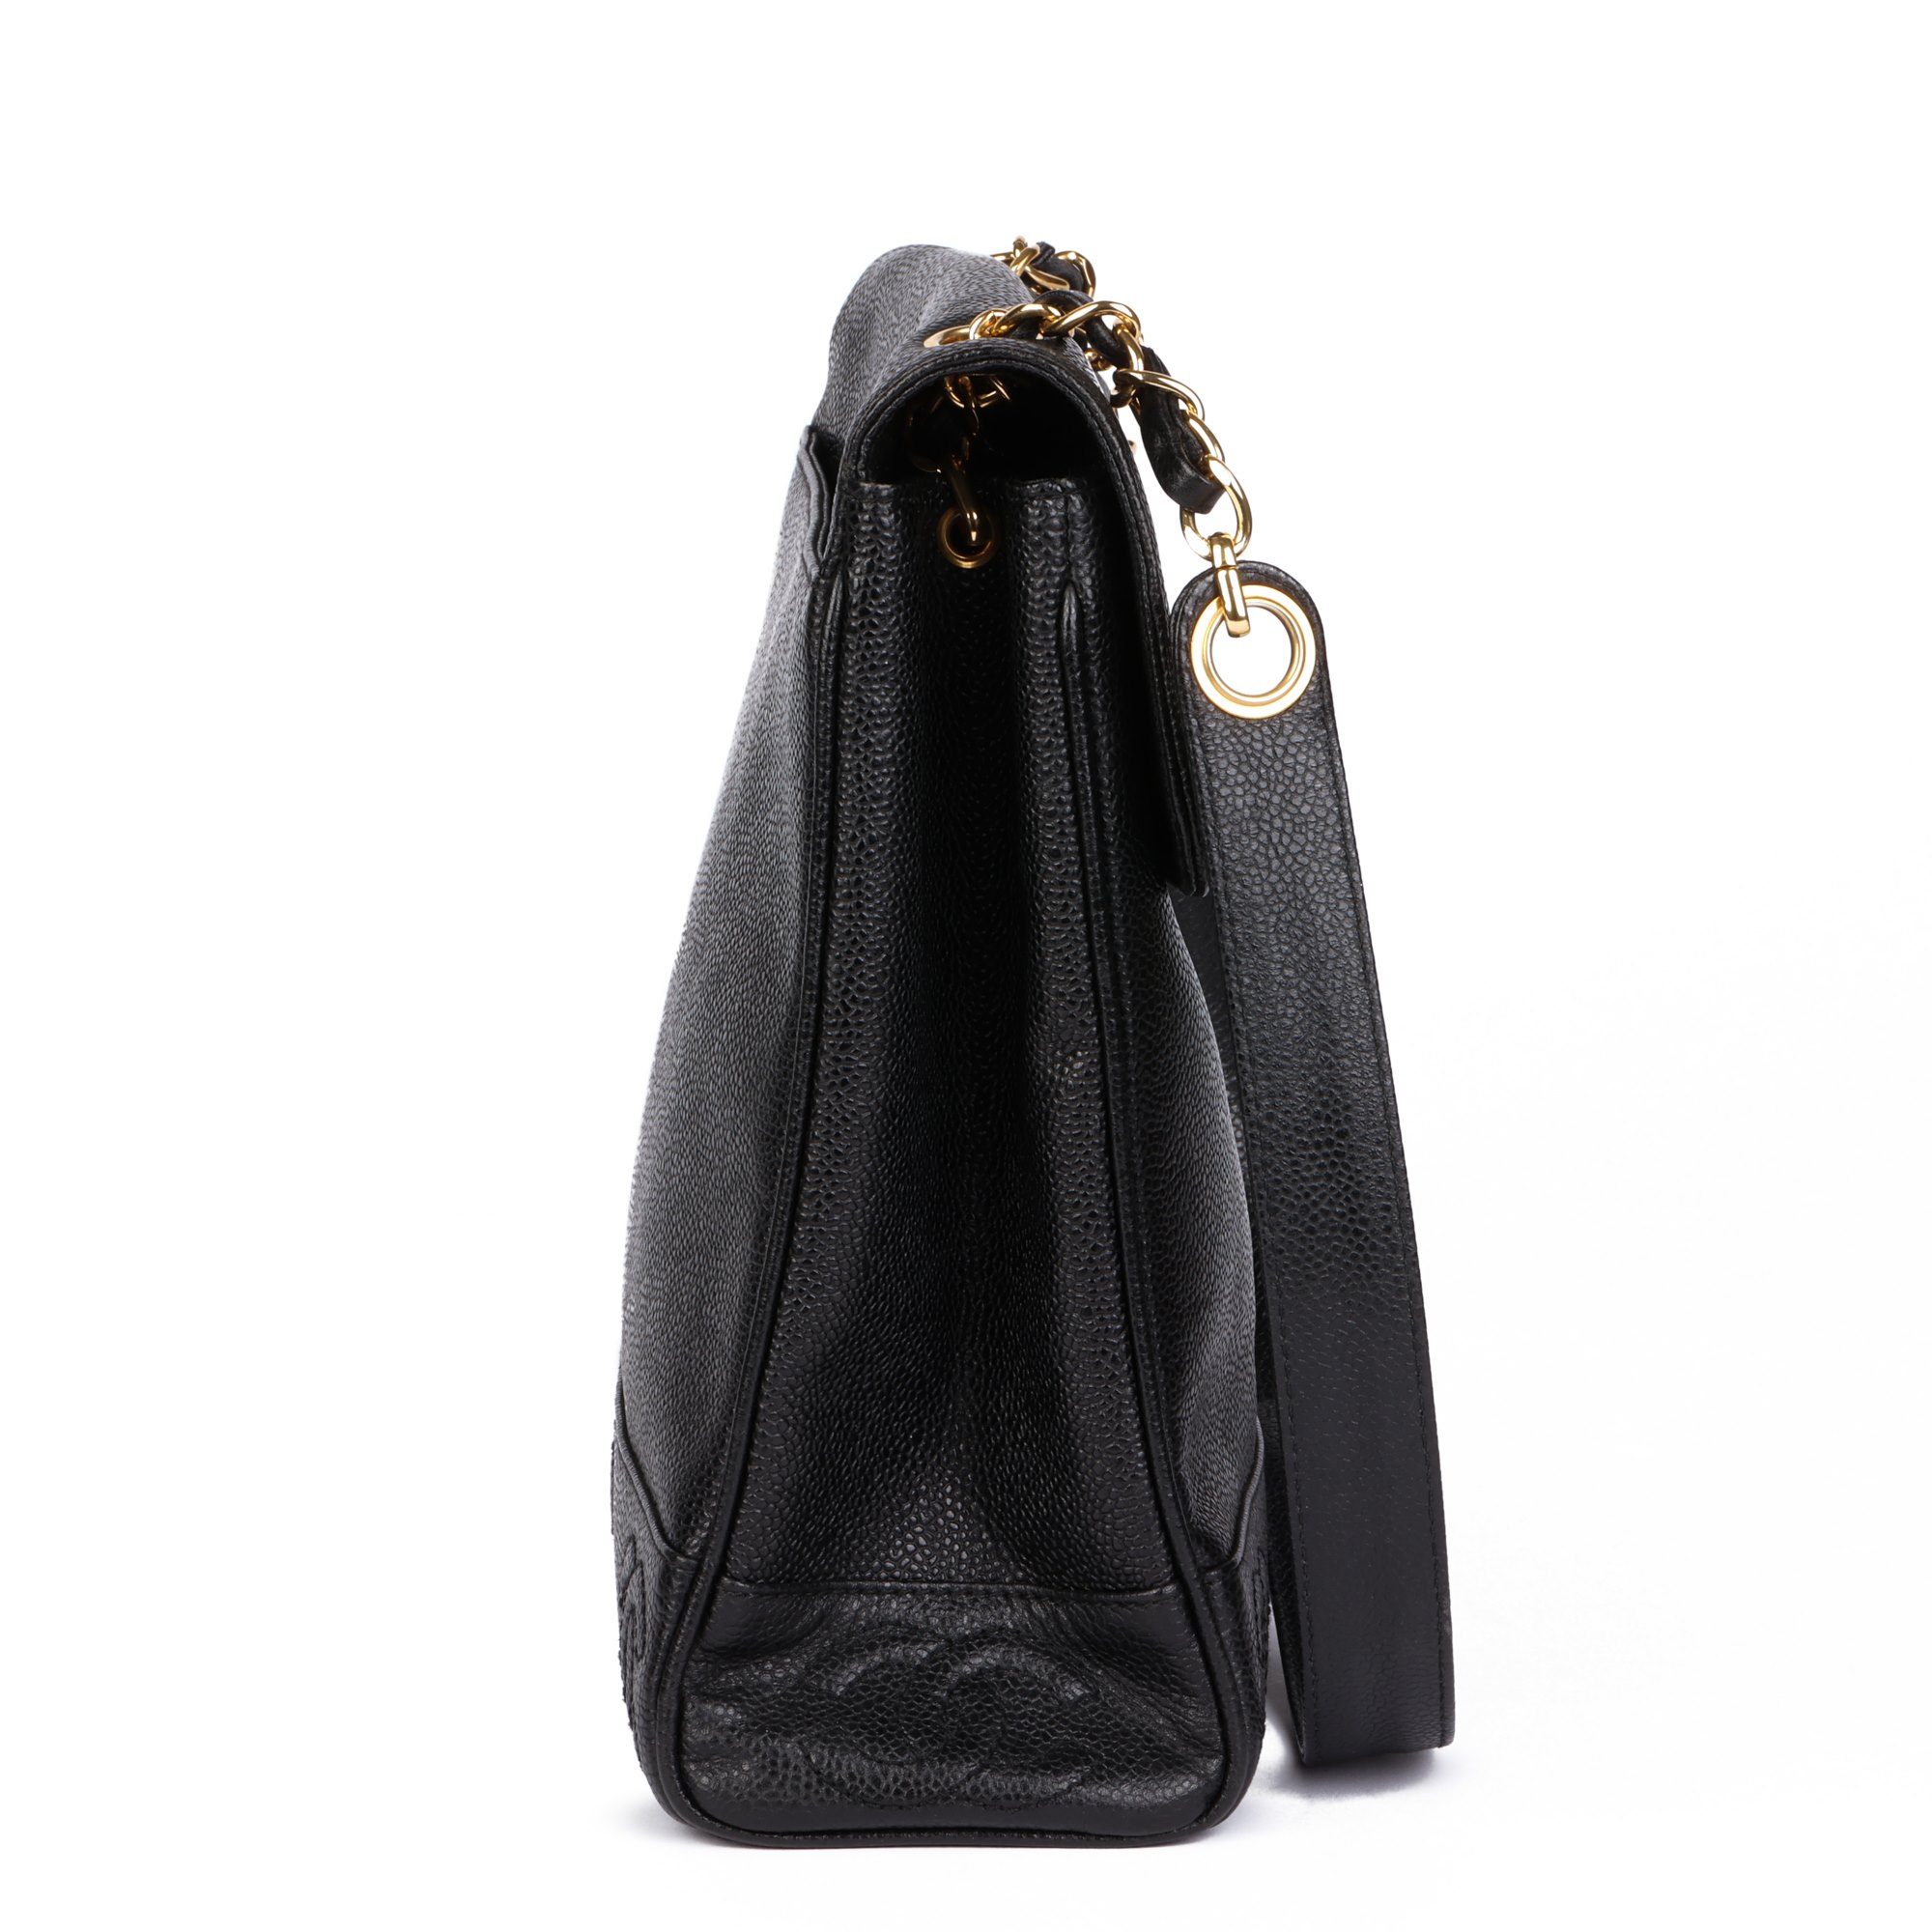 Chanel Black Caviar Leather Vintage Classic Shoulder Bag